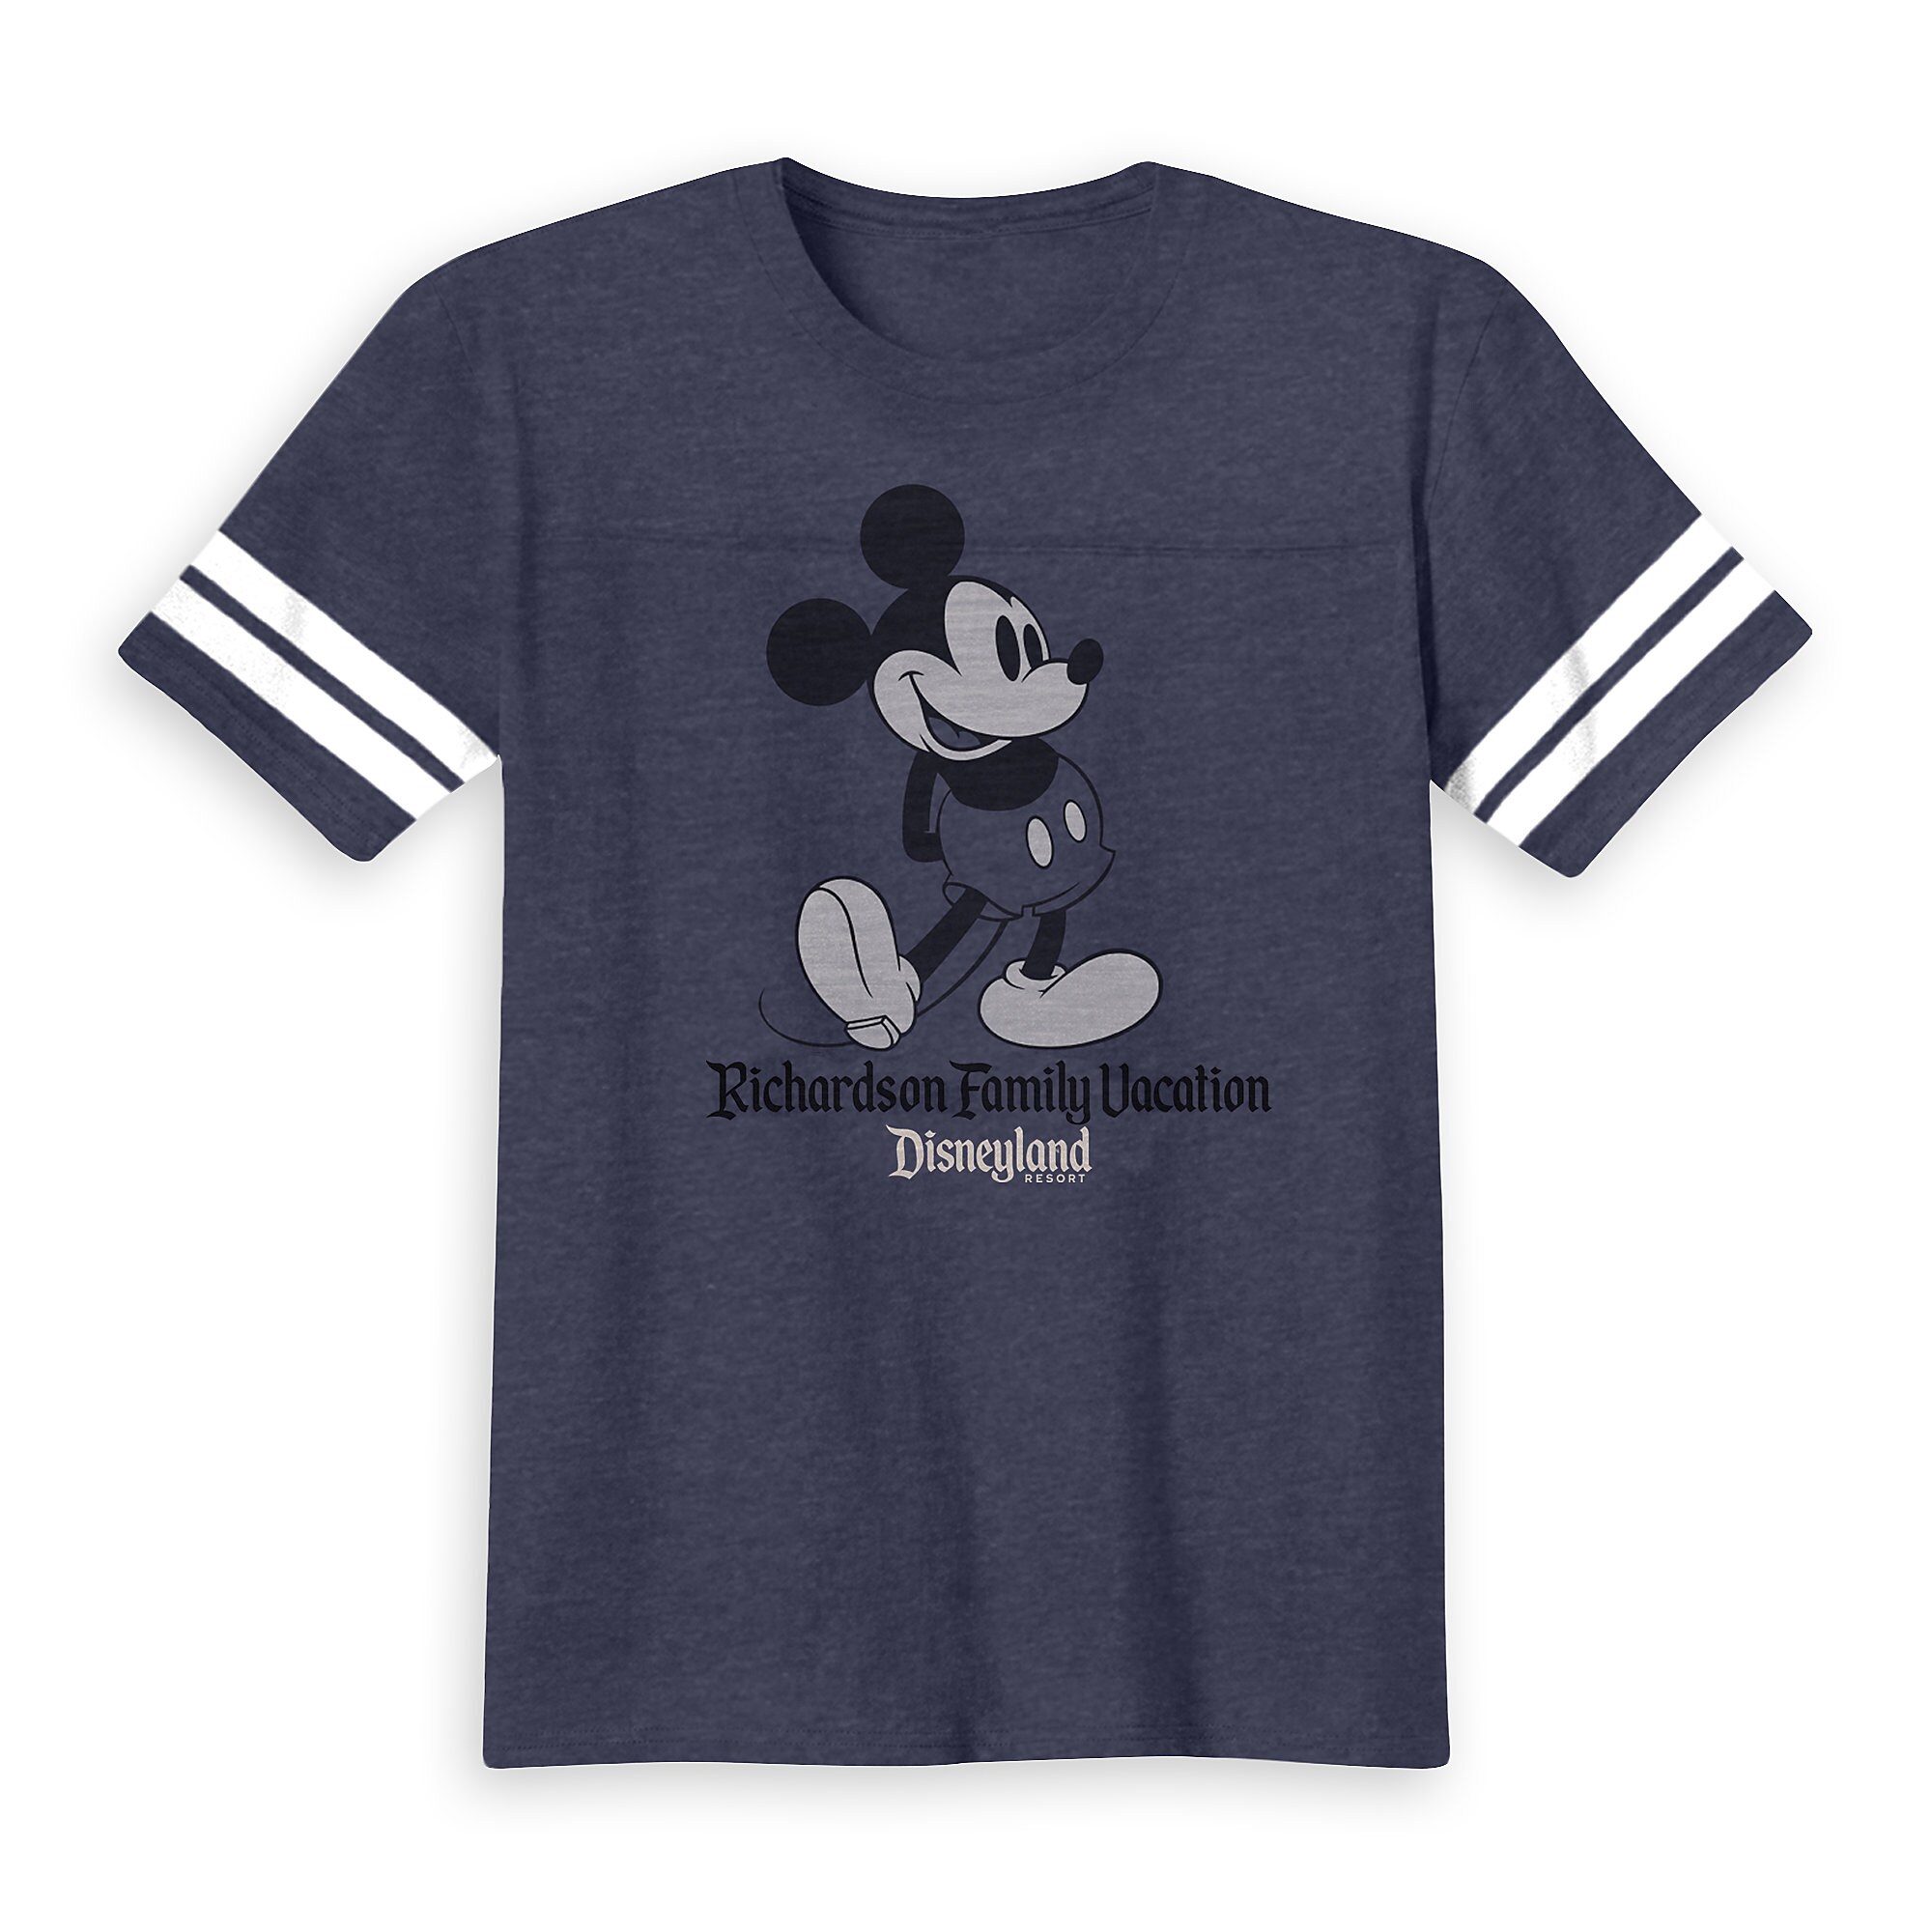 Kids' Mickey Mouse Family Vacation Heathered Football T-Shirt - Disneyland - Customized